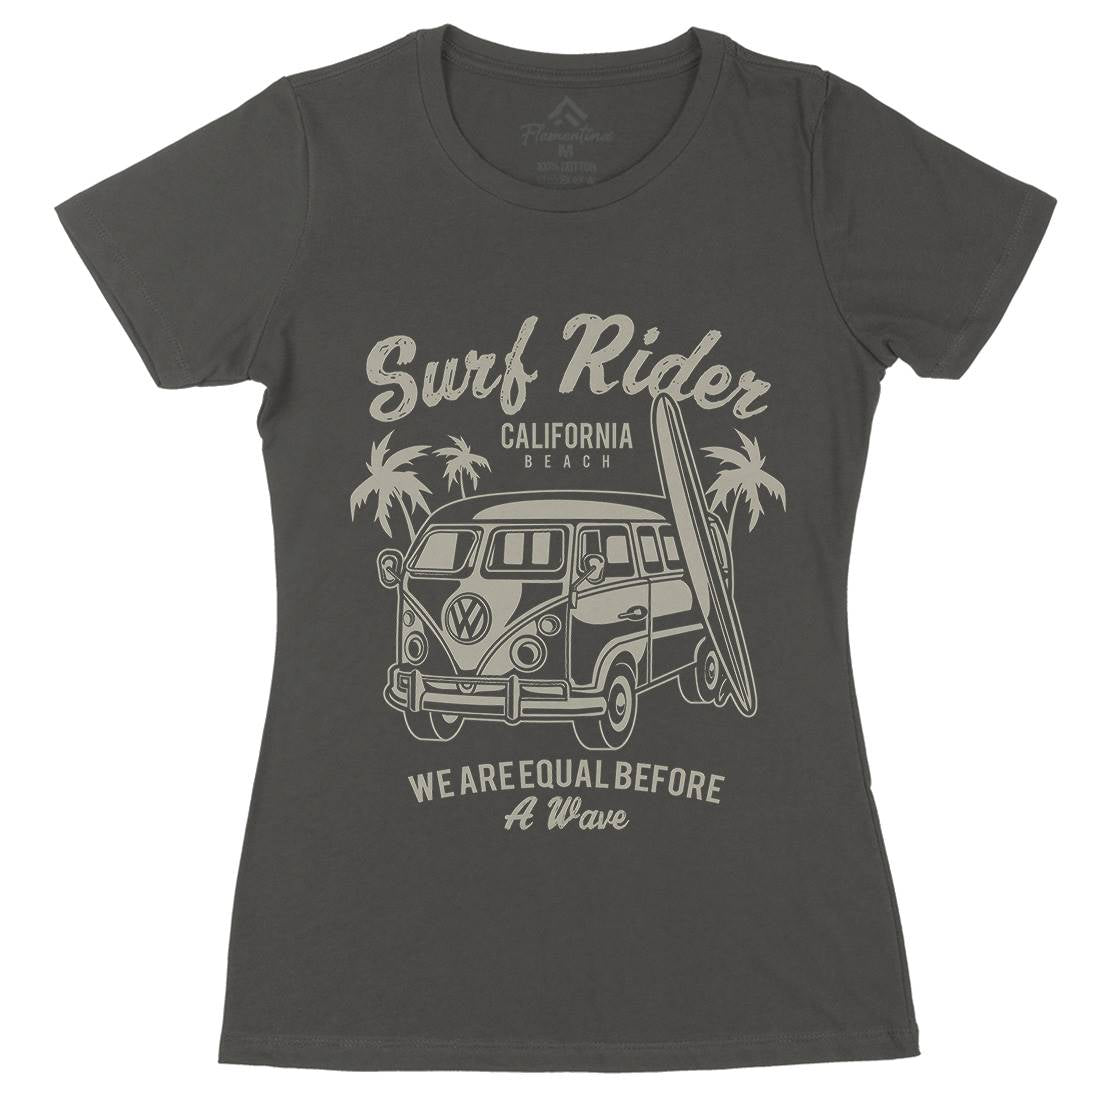 Rider Womens Organic Crew Neck T-Shirt Surf A169